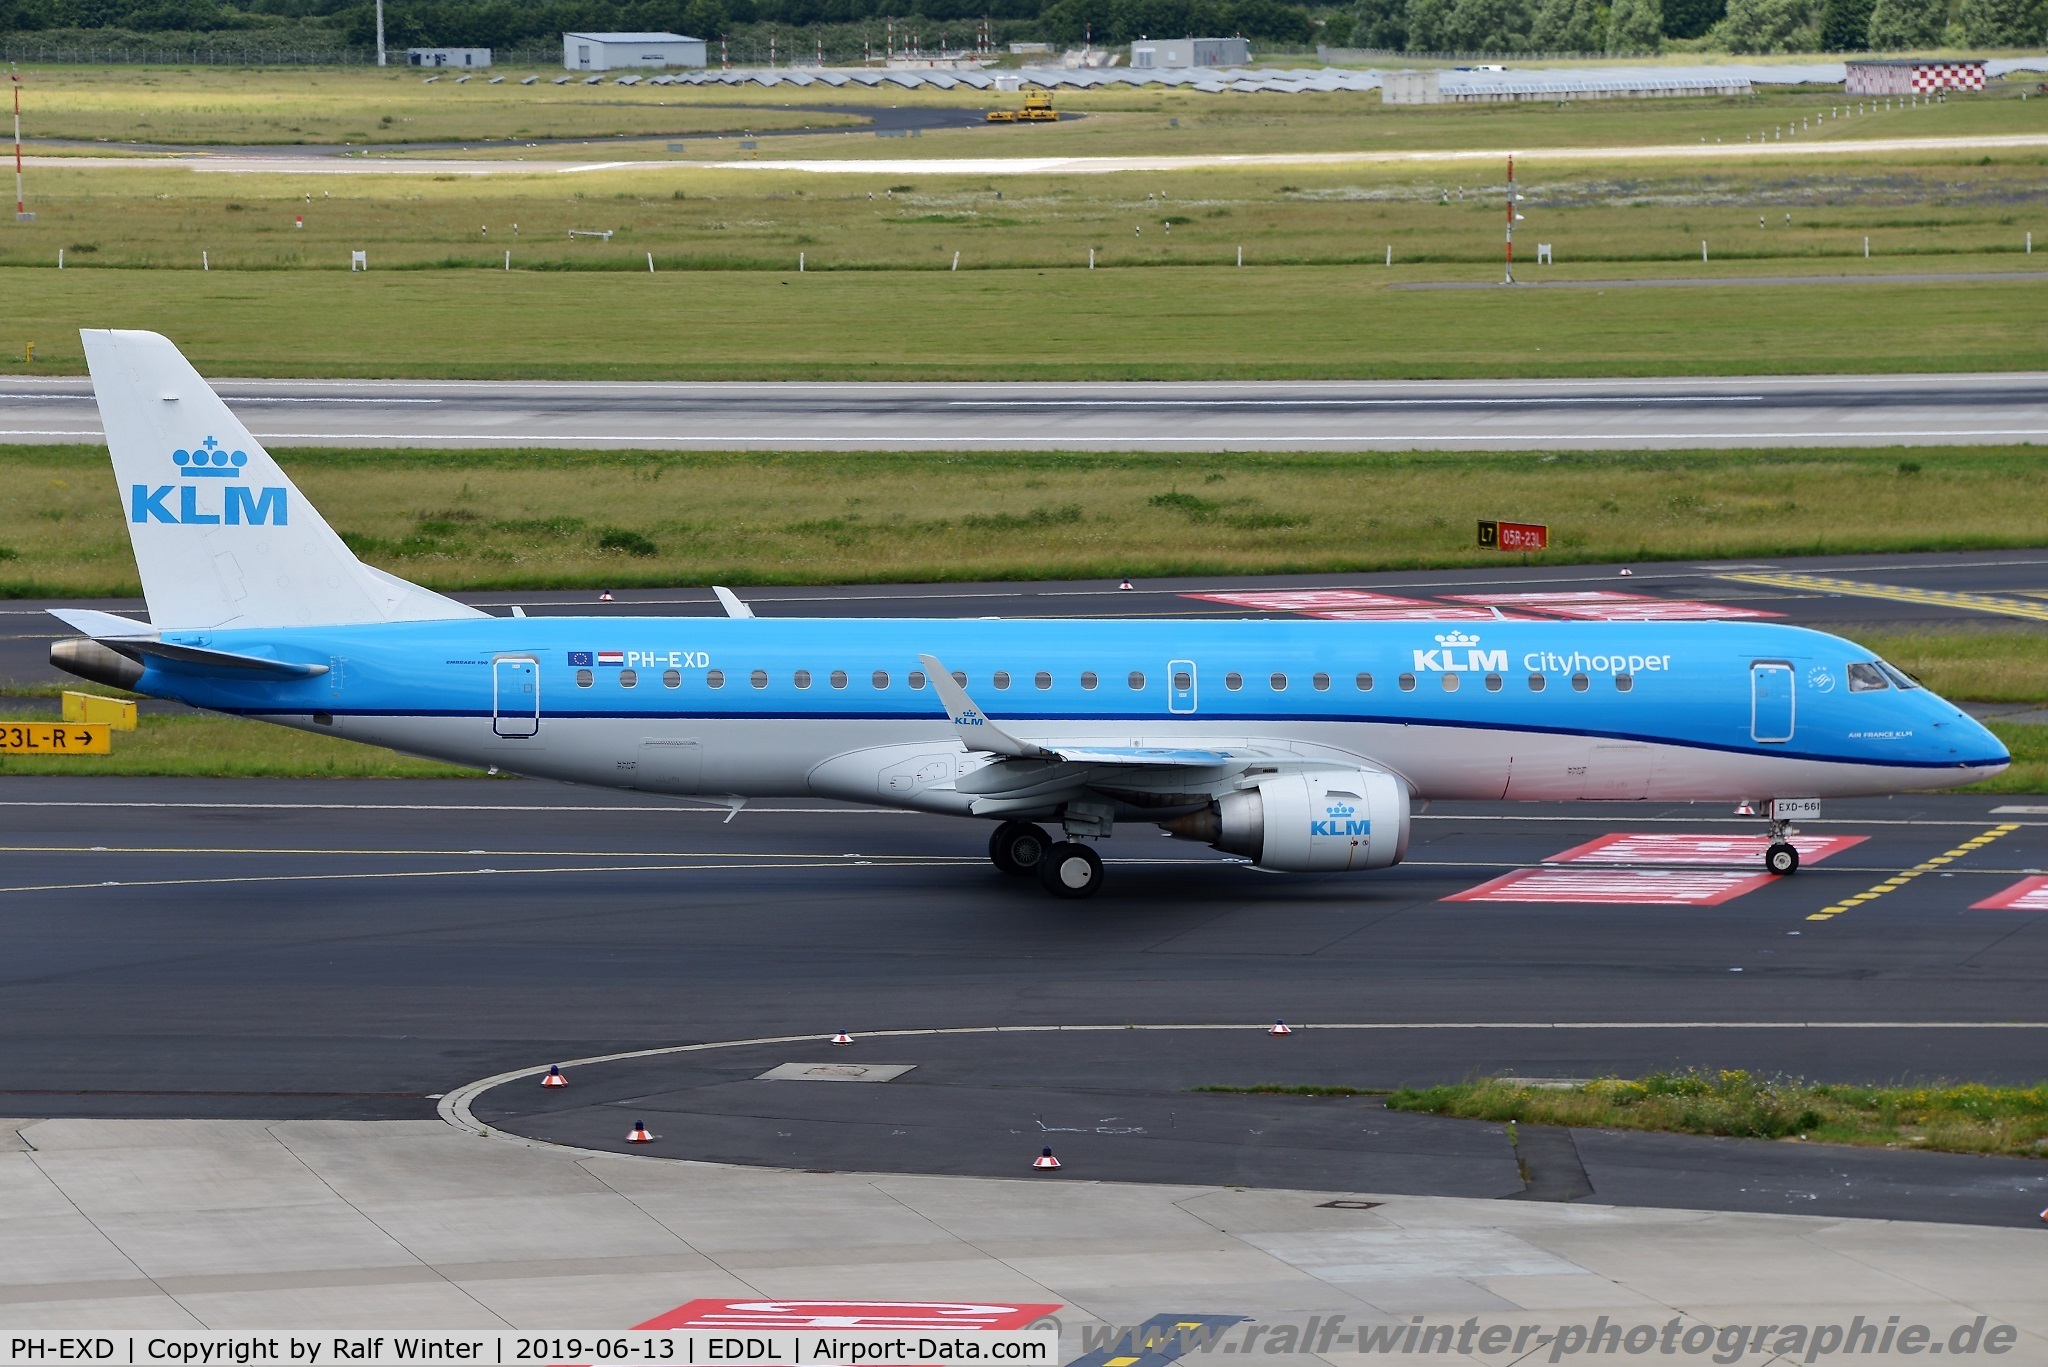 PH-EXD, 2014 Embraer 190LR (ERJ-190-100LR) C/N 19000661, Embrear ERJ-190STD 190-100 - WA KLC KLM Cityhopper - 19000661 - PH-EXD - 13.06.2019 - DUS